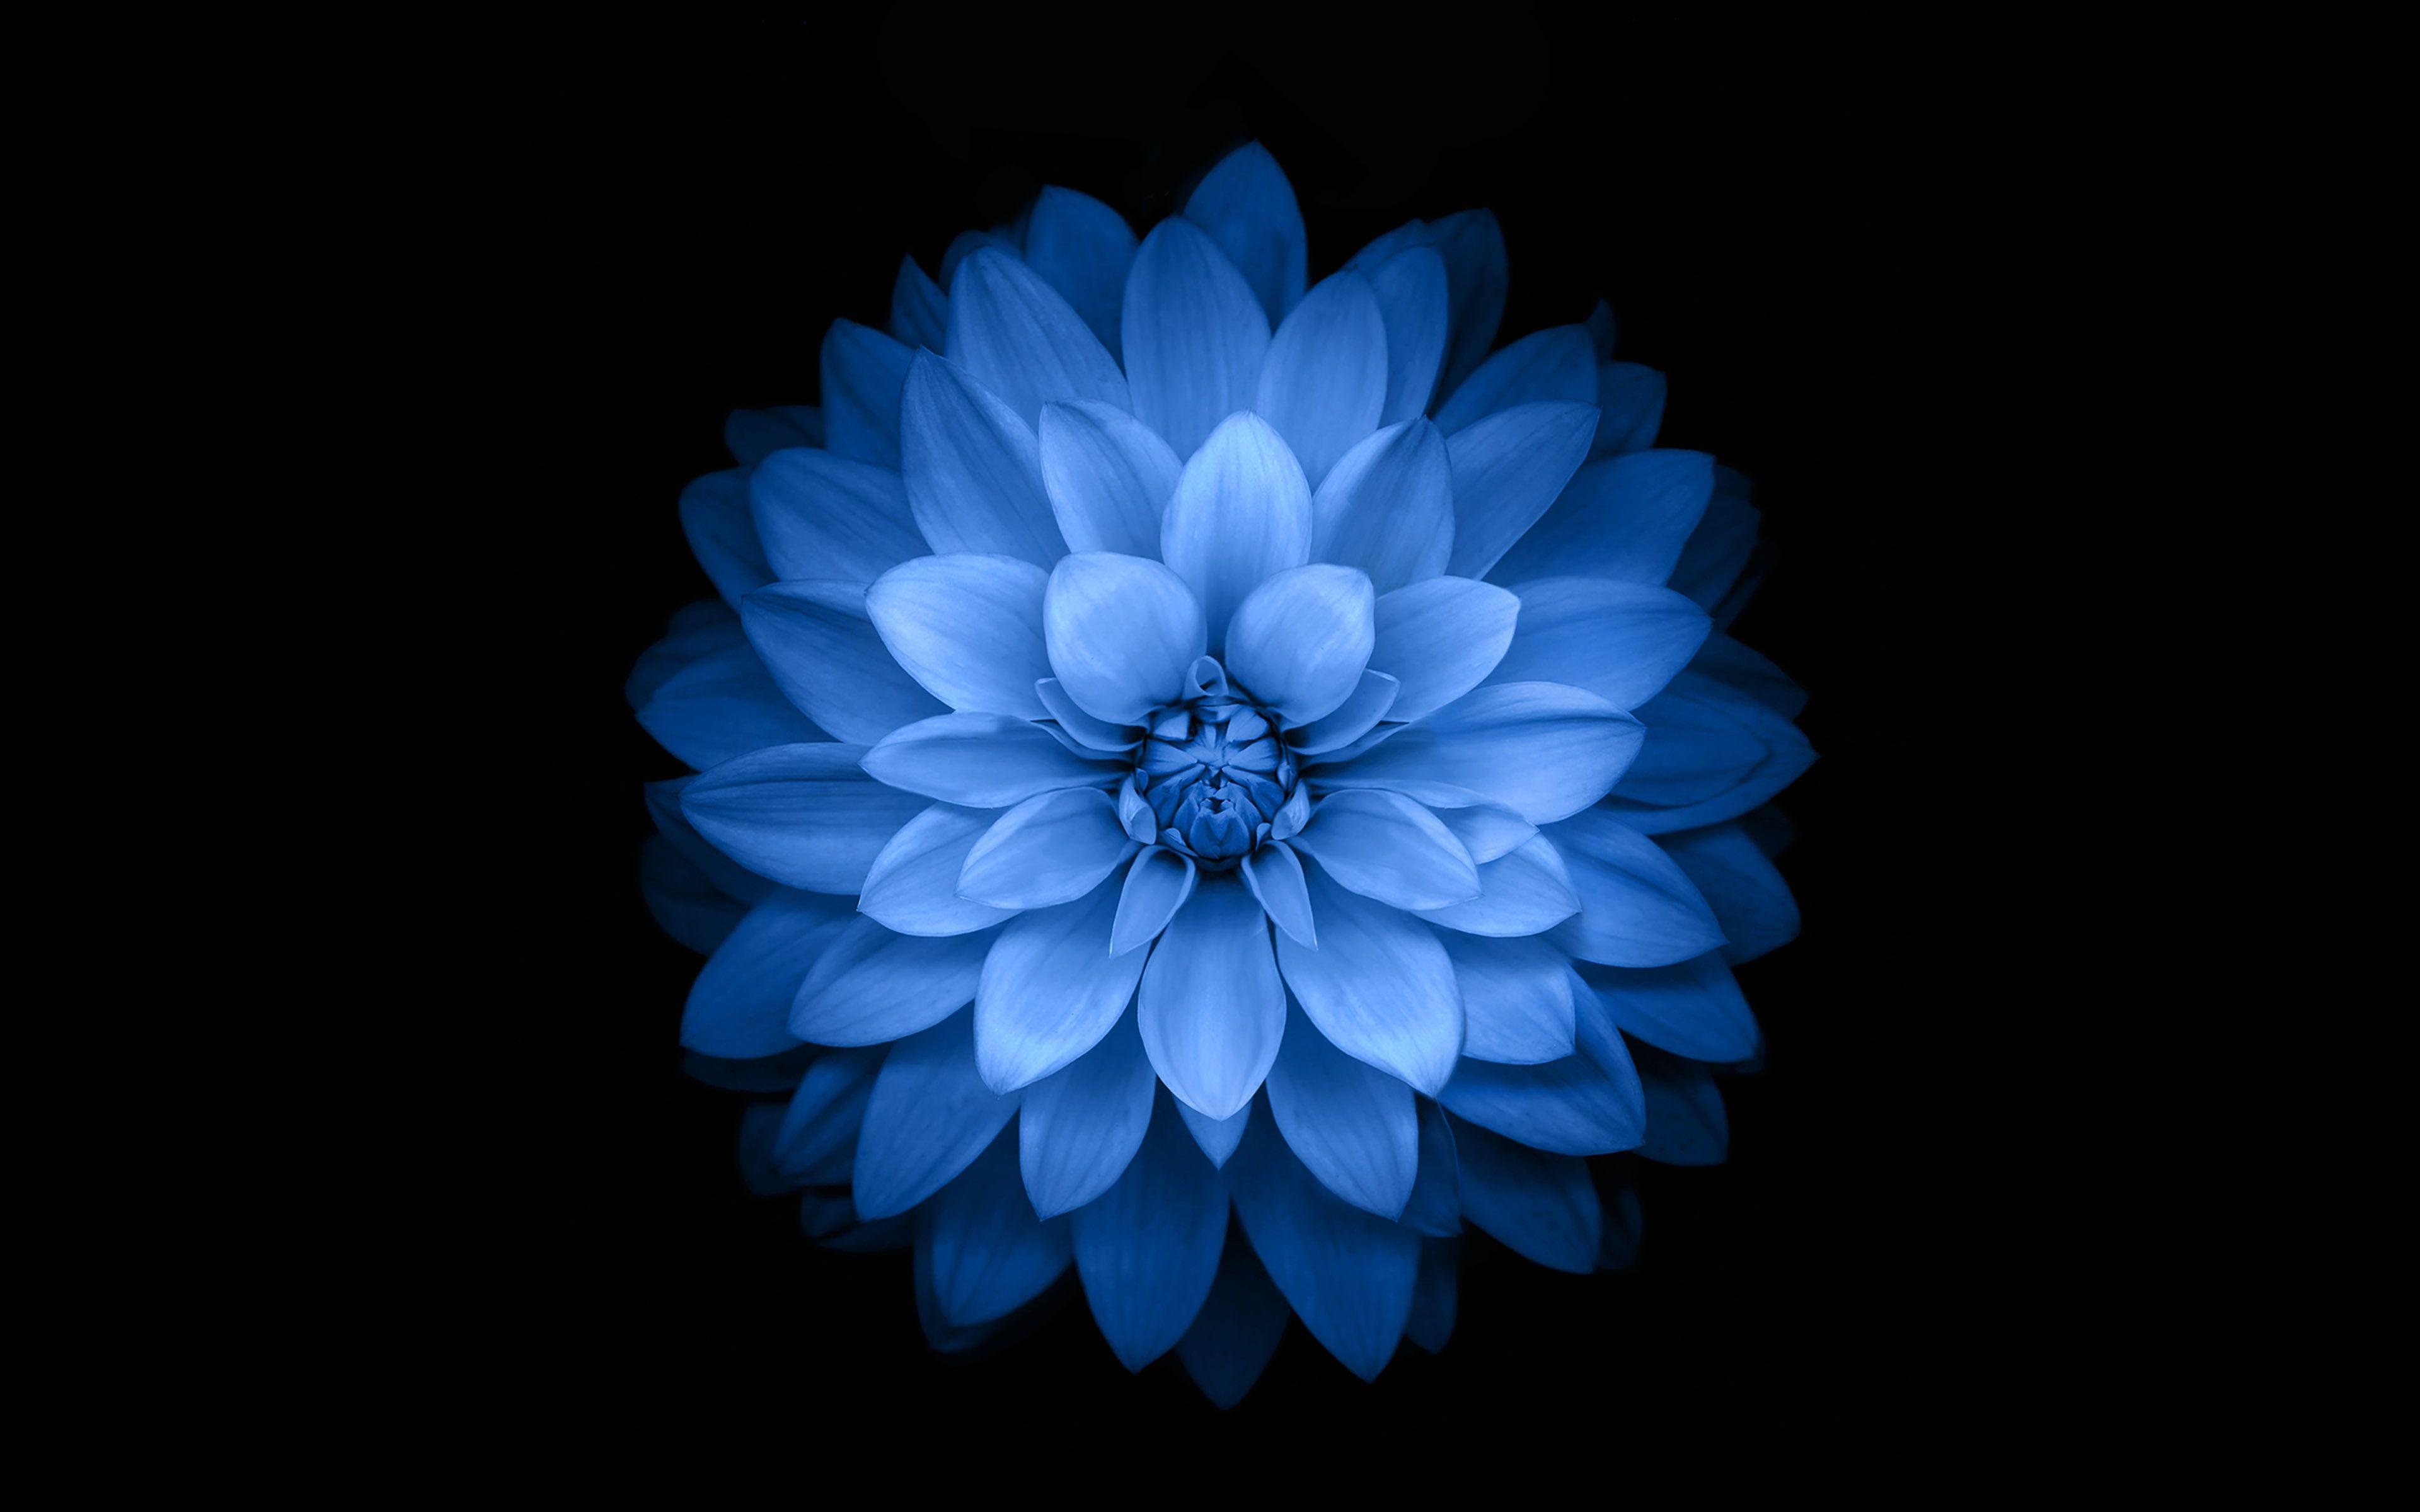 Wallpaper Apple Blue Lotus Iphone6 Plus Ios8 Flower Wallpaper